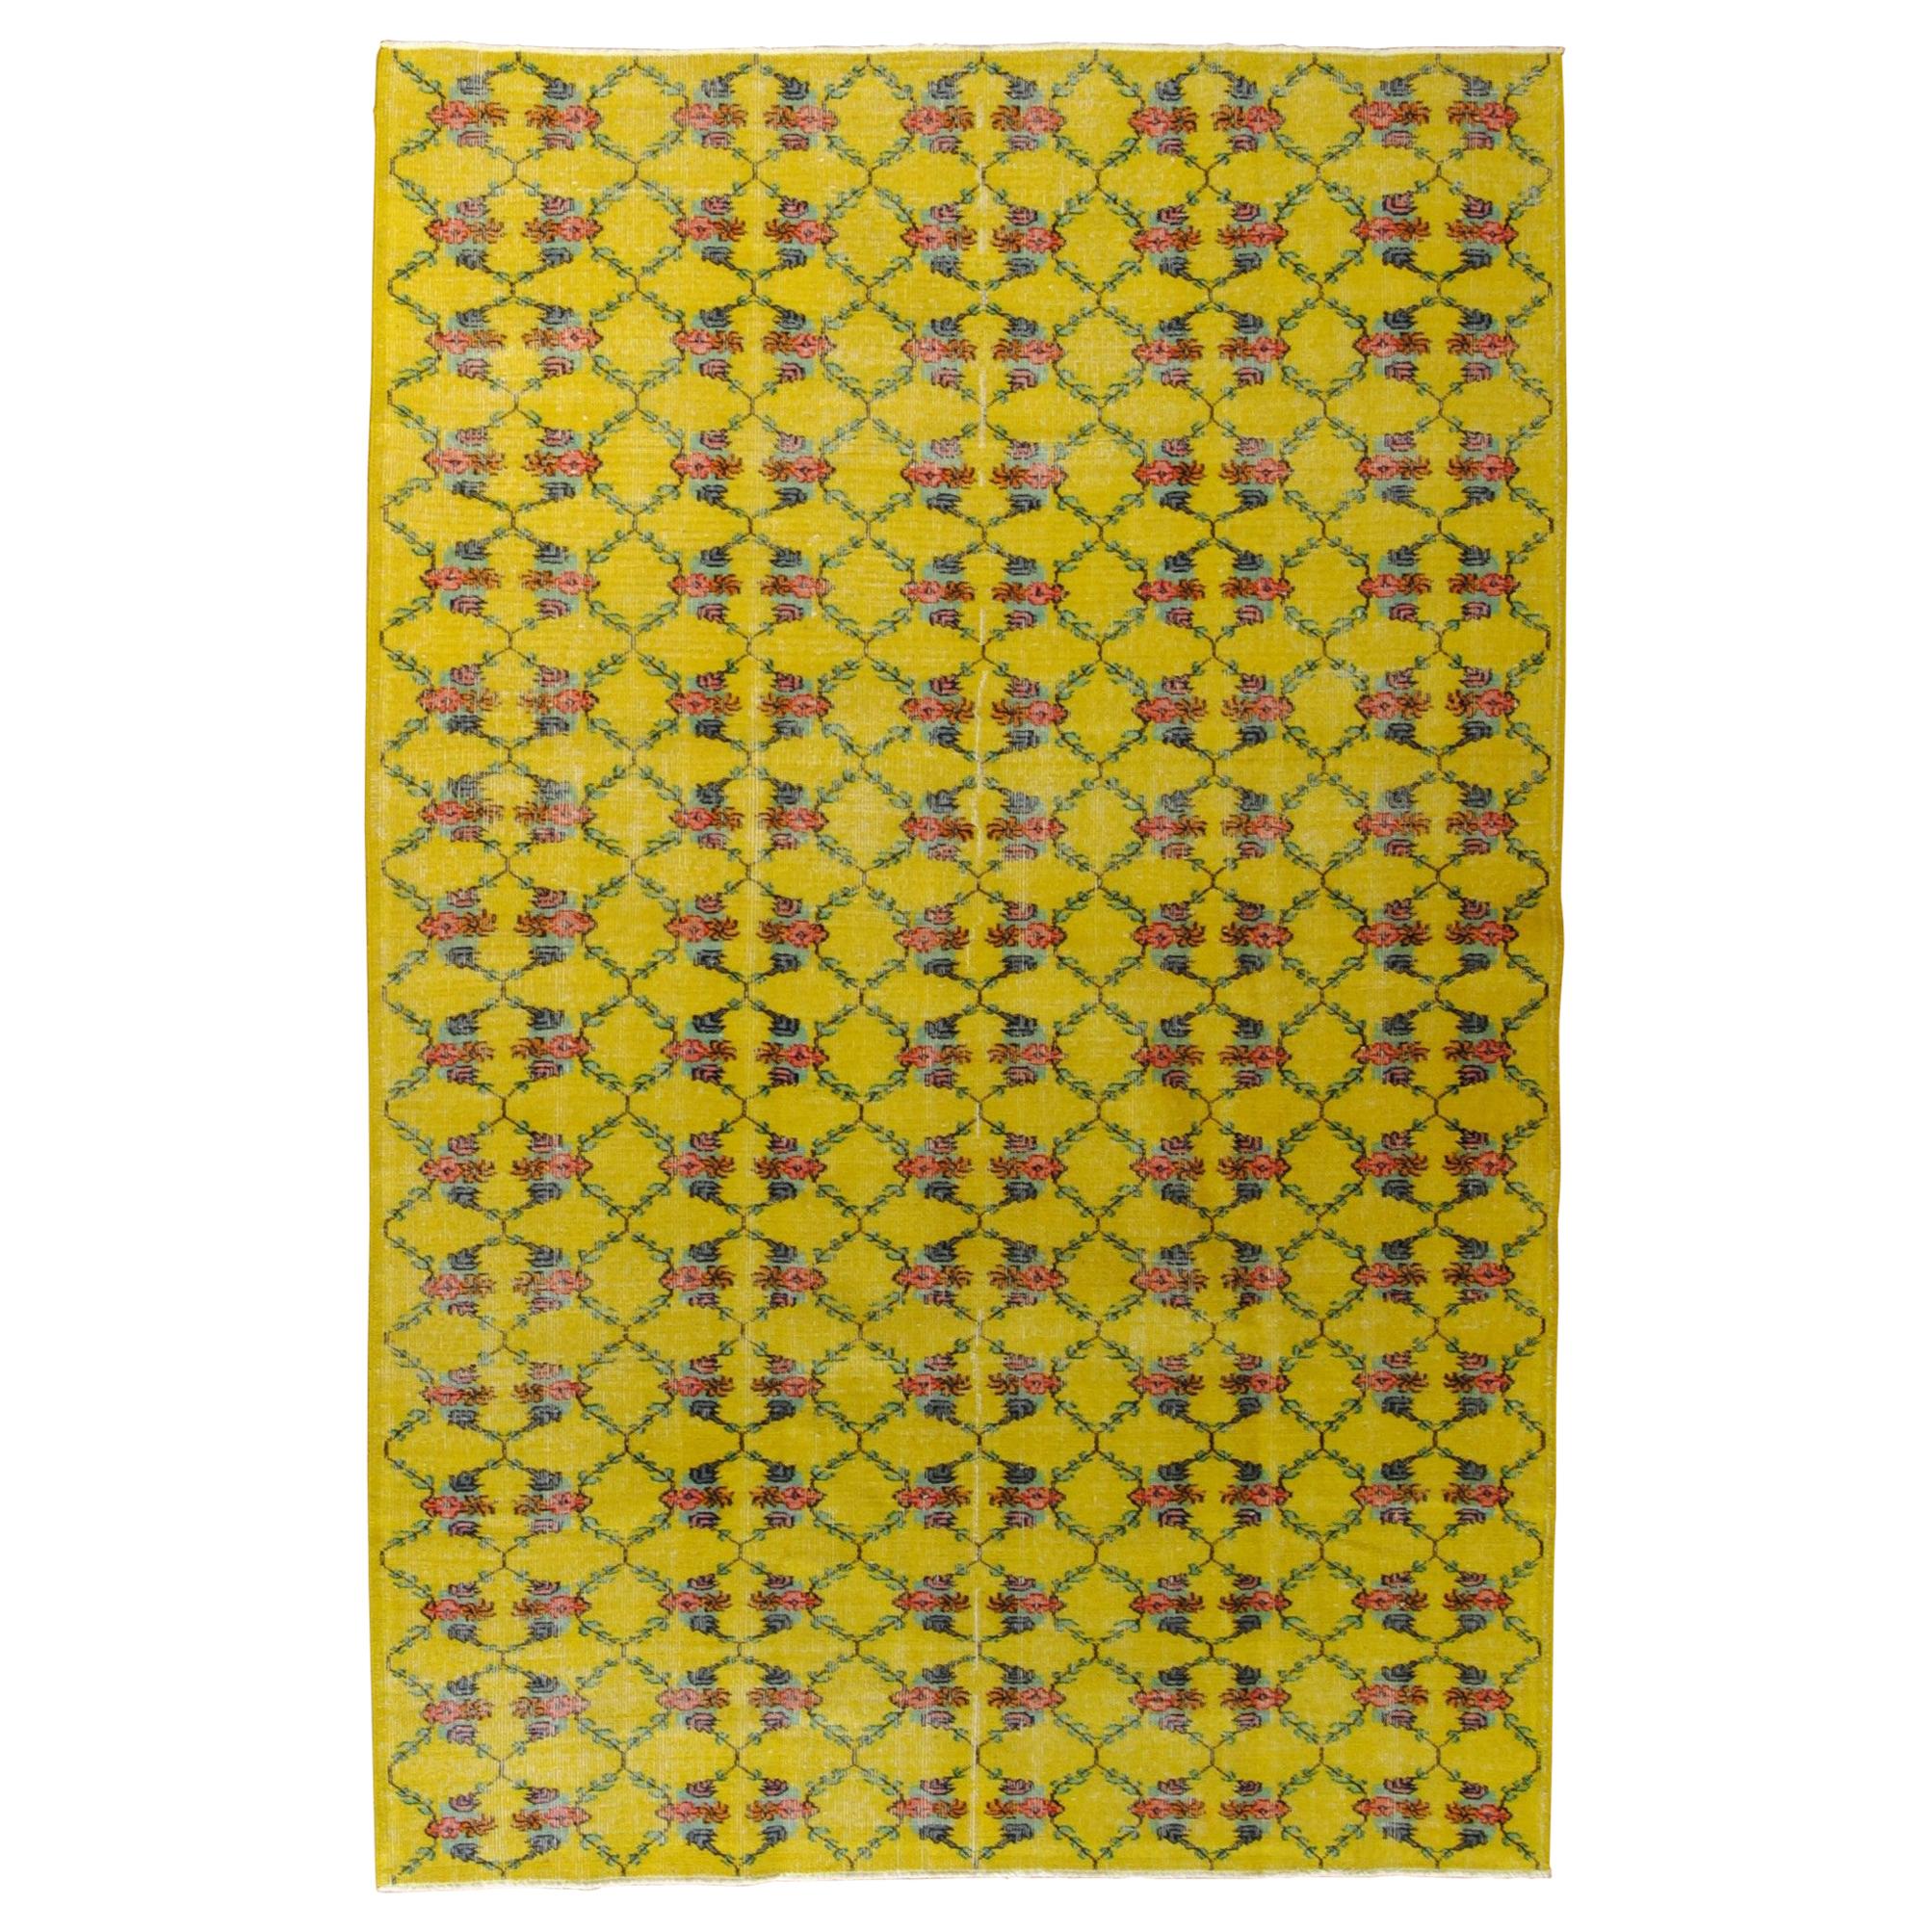 20th Century Yellow Floreal Turkish Art Deco Rug Designed by Zeki Muren, ca 1950